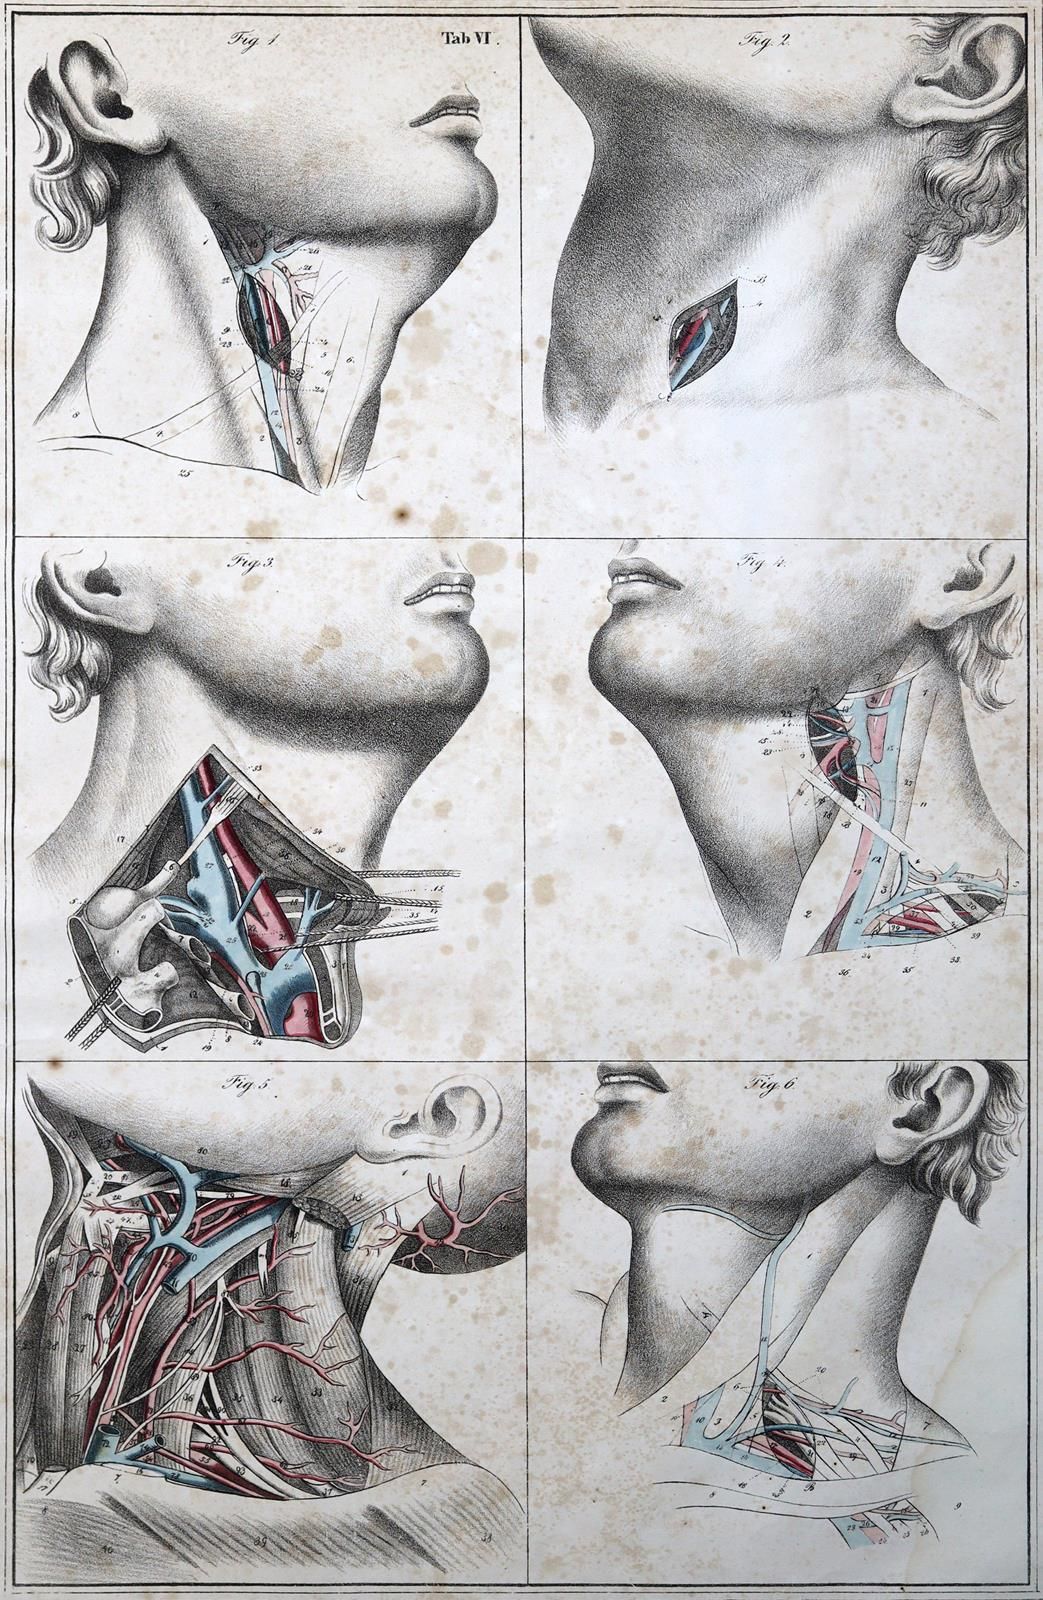 Blasius,E. Akiurgic illustrations or representation of bloody surgical operation&hellip;